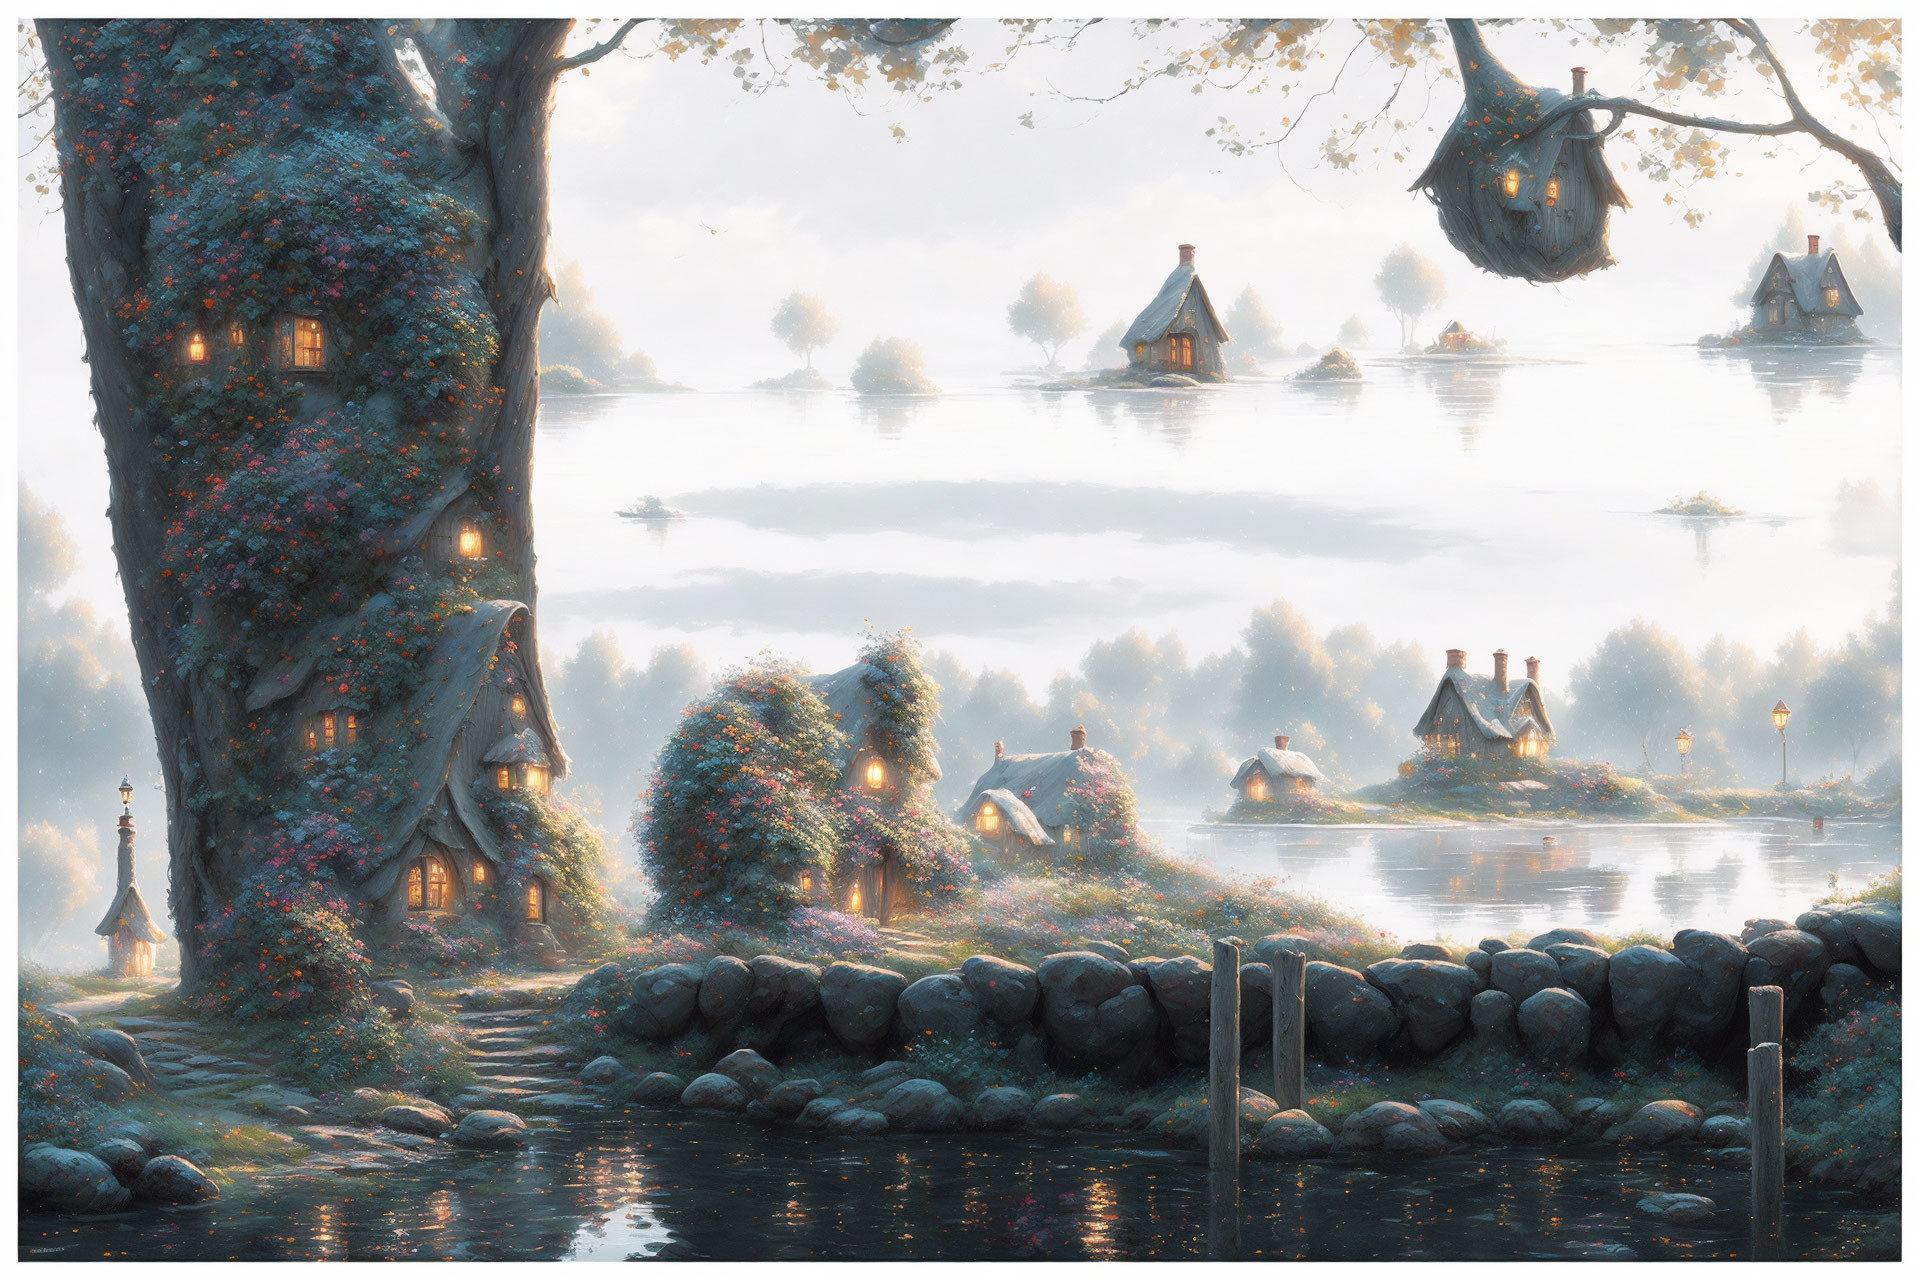 Enchanted forest scene: whimsical treehouses, serene lake, warm lights, mist at dawn